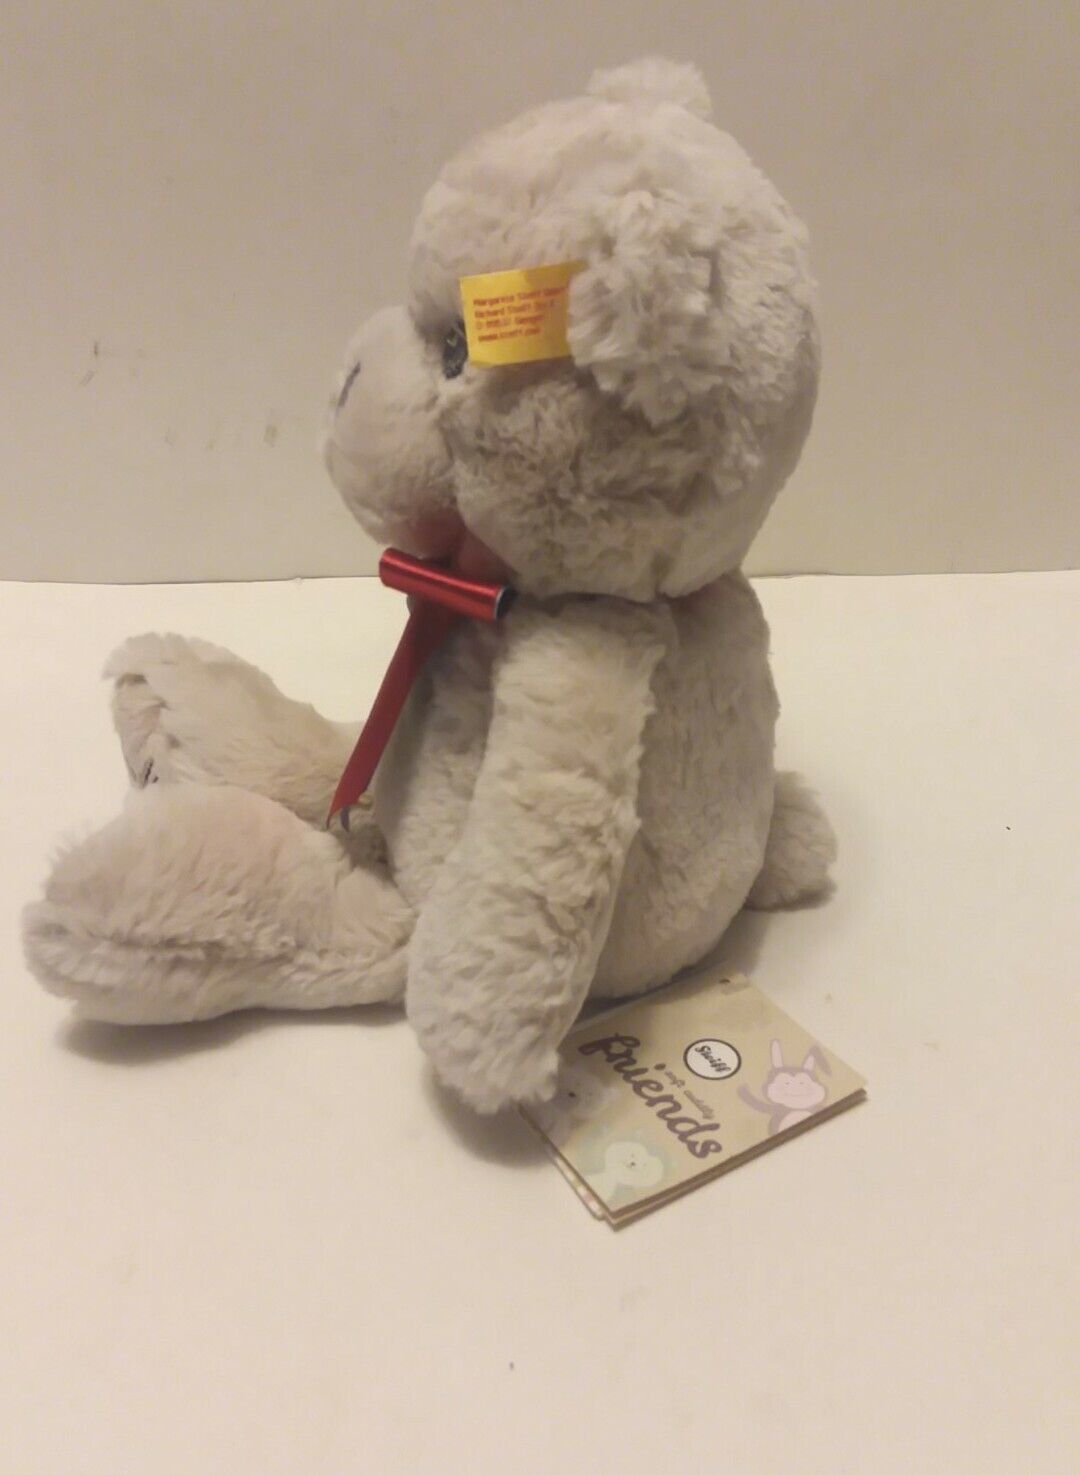 New With Tags Steiff Neiman Marcus Tan the Bear teddy stuffed animal 12” Steiff - фотография #4